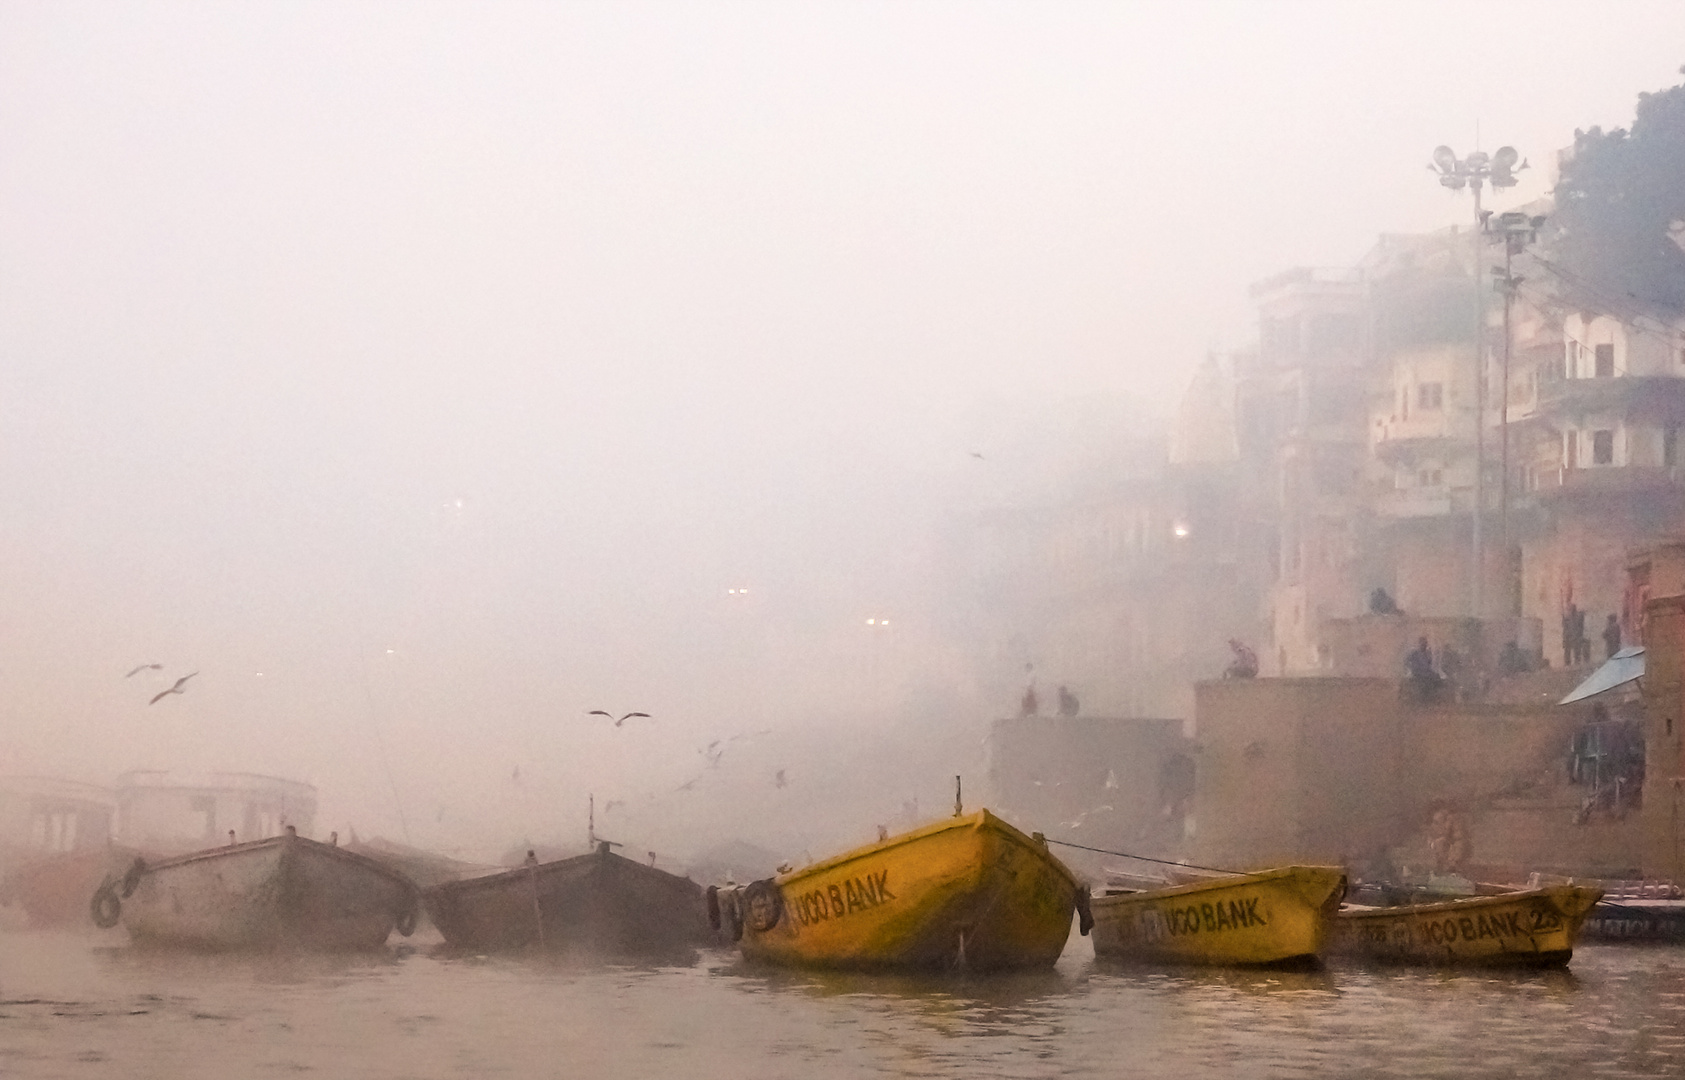 Varanasi - Ganges